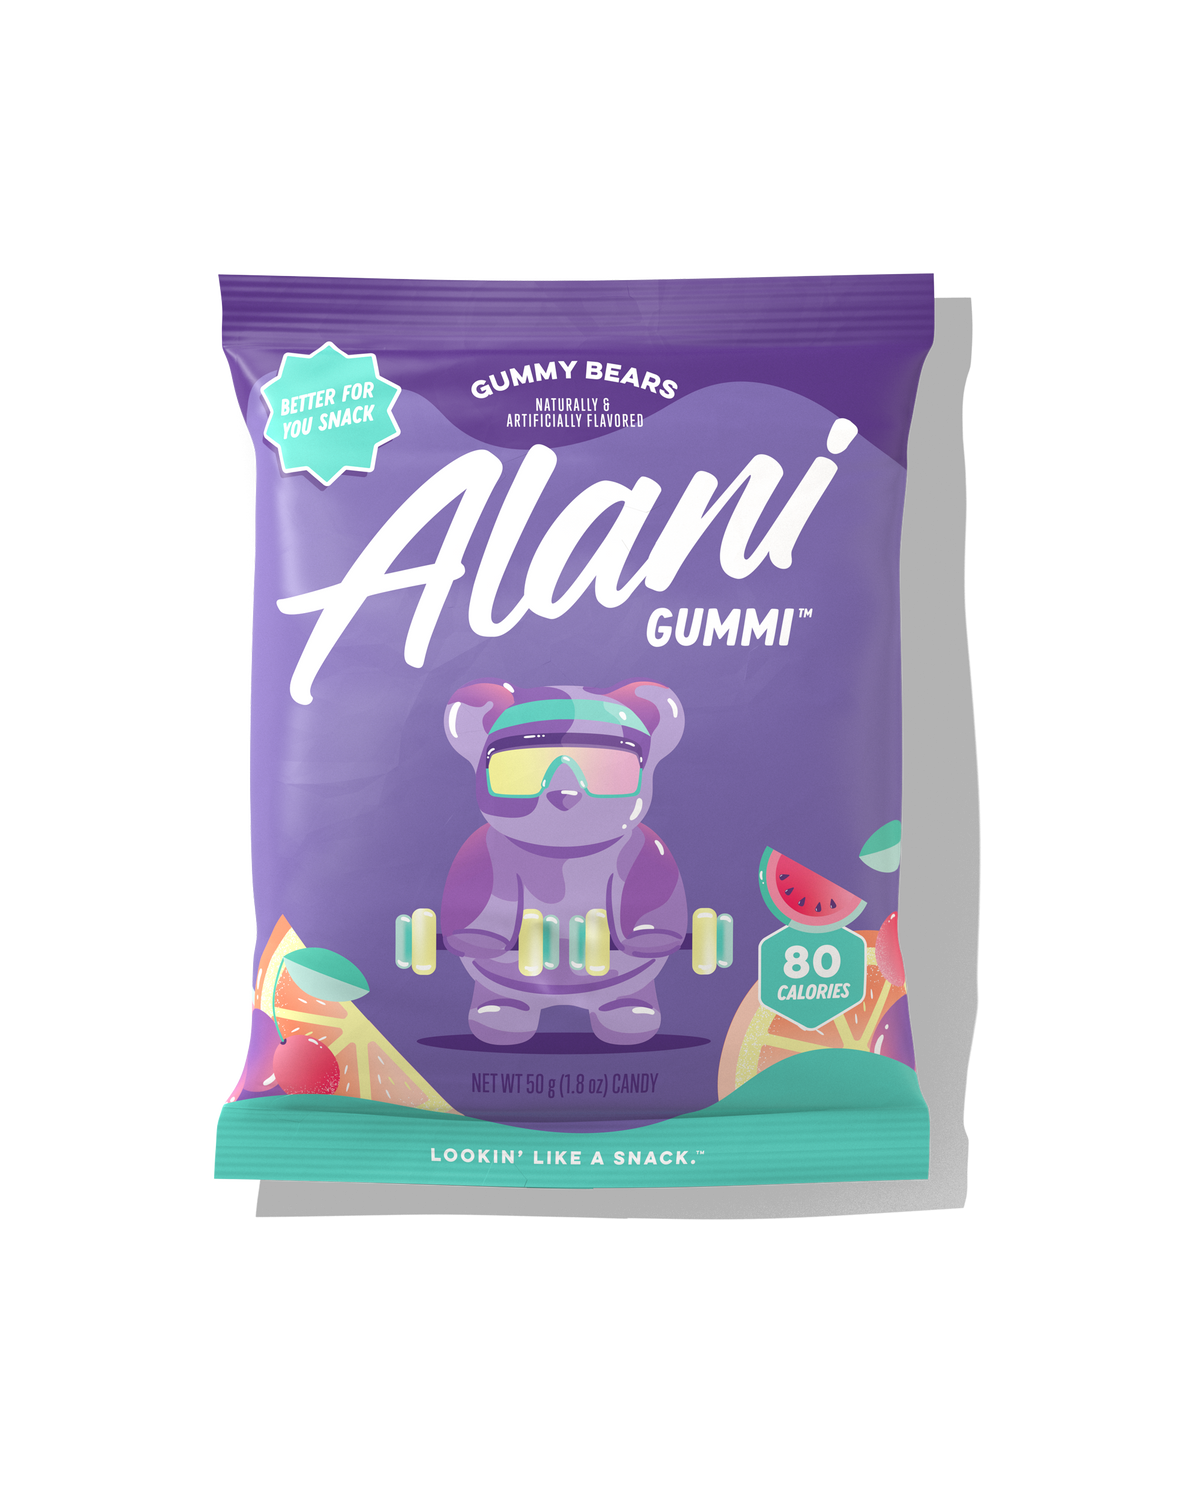 A 1.8oz Alani Nu bag of Gummi in Gummy Bears flavor.